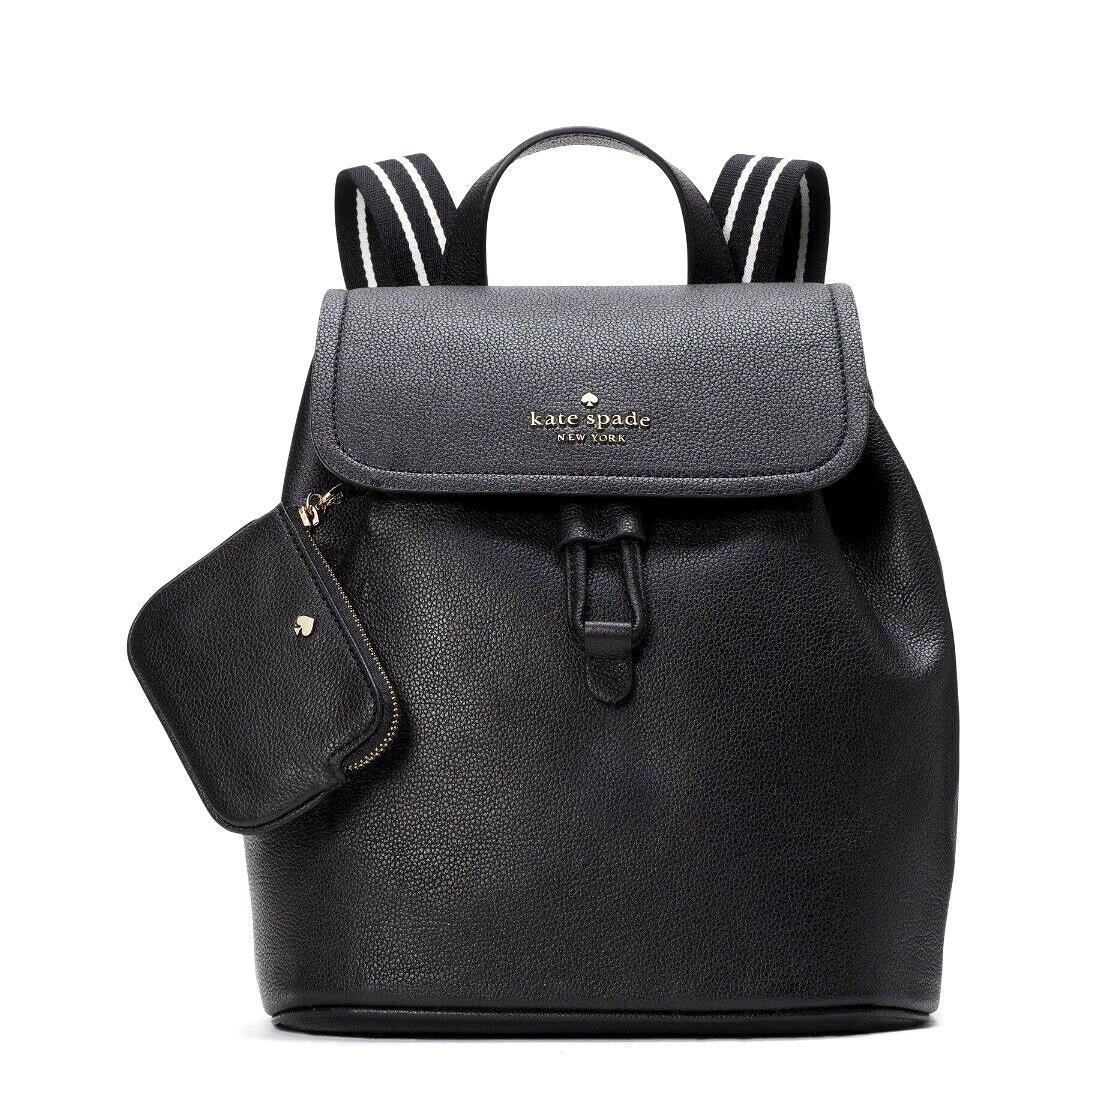 New Kate Spade Rosie Medium Flap Backpack Black with Dust Bag Included